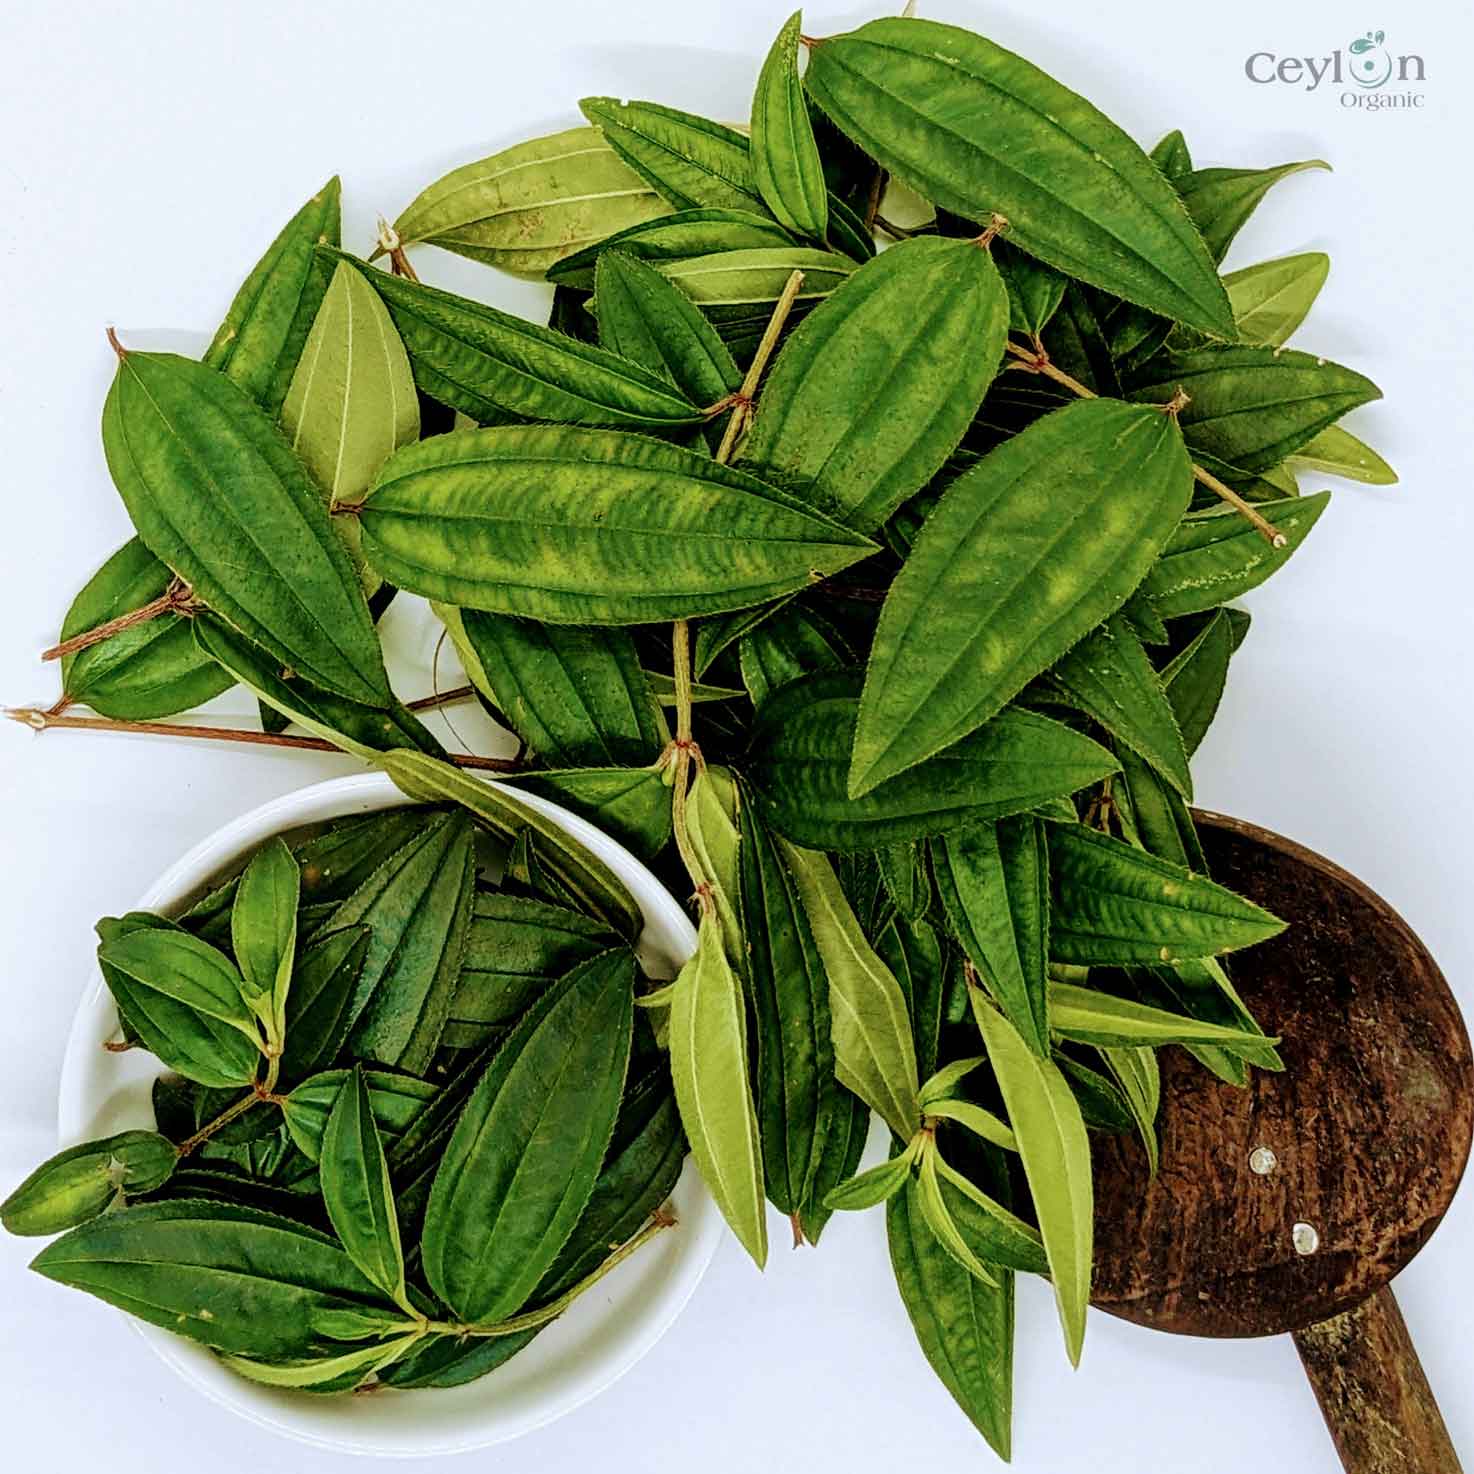 3kg+ Organic liver plant leaves Heen bovitiya(Osbeckia octandra) | Ceylon organic-3